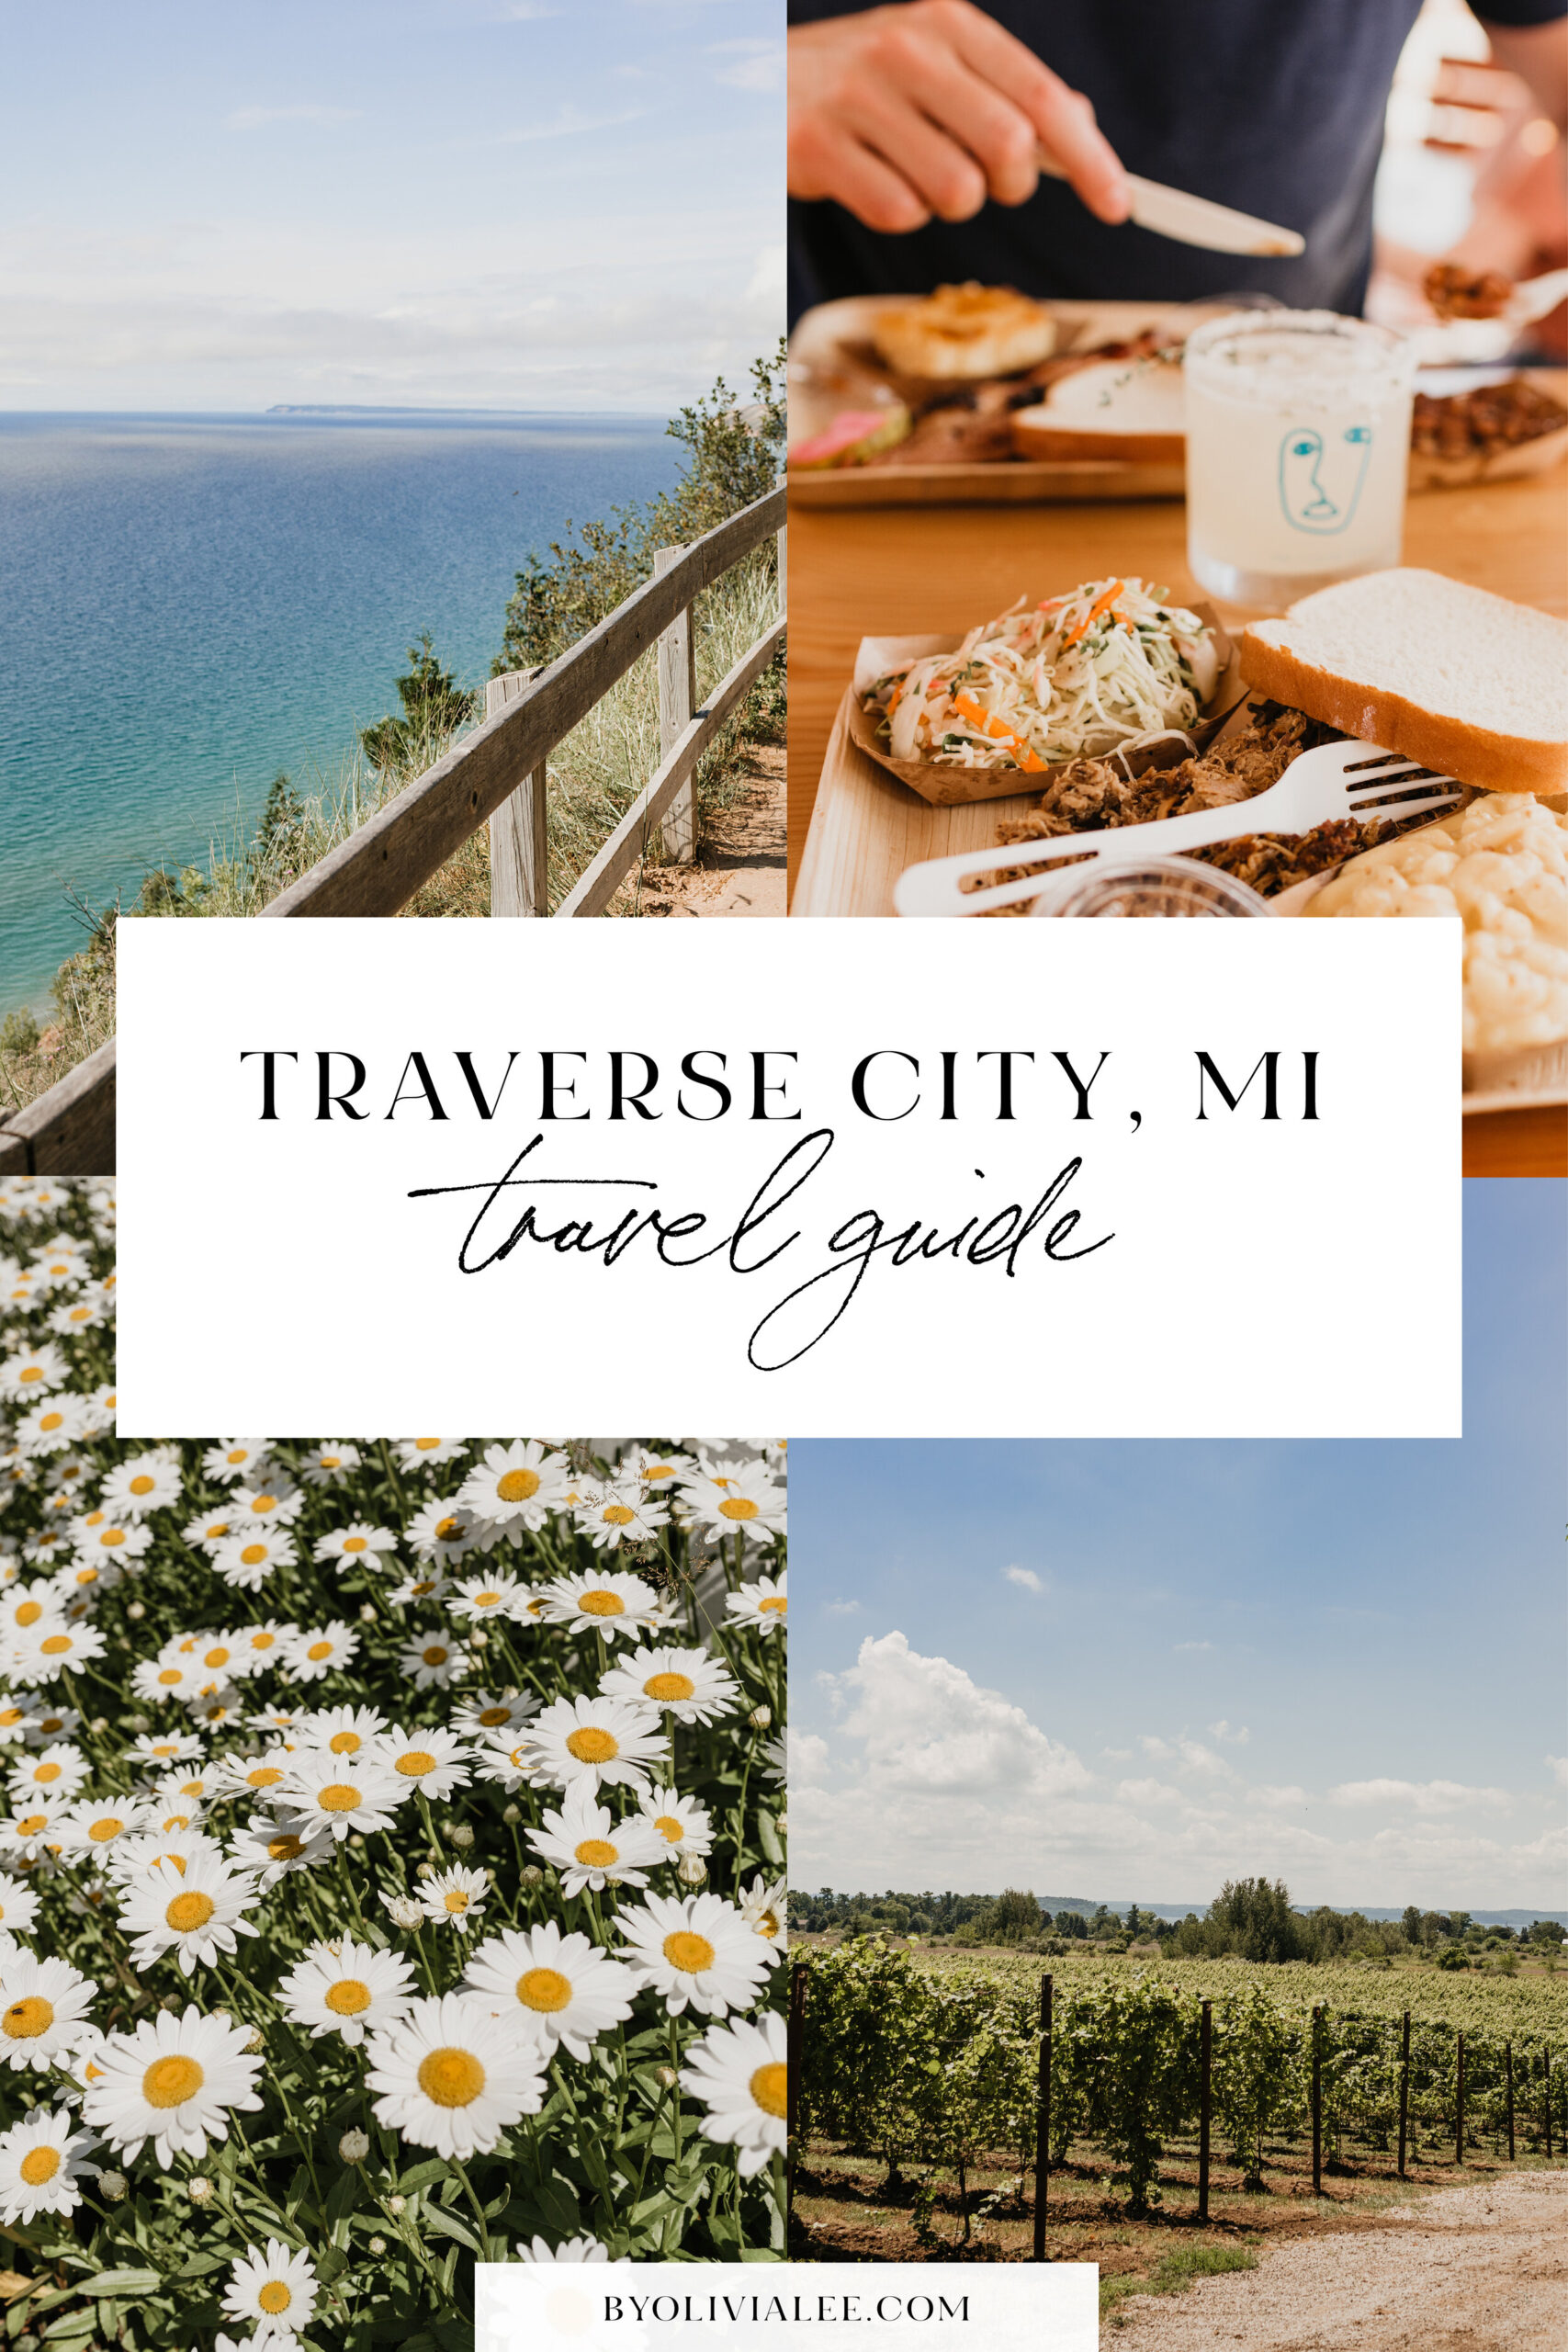 Traverse City Travel Guide Pinterest Image.jpg